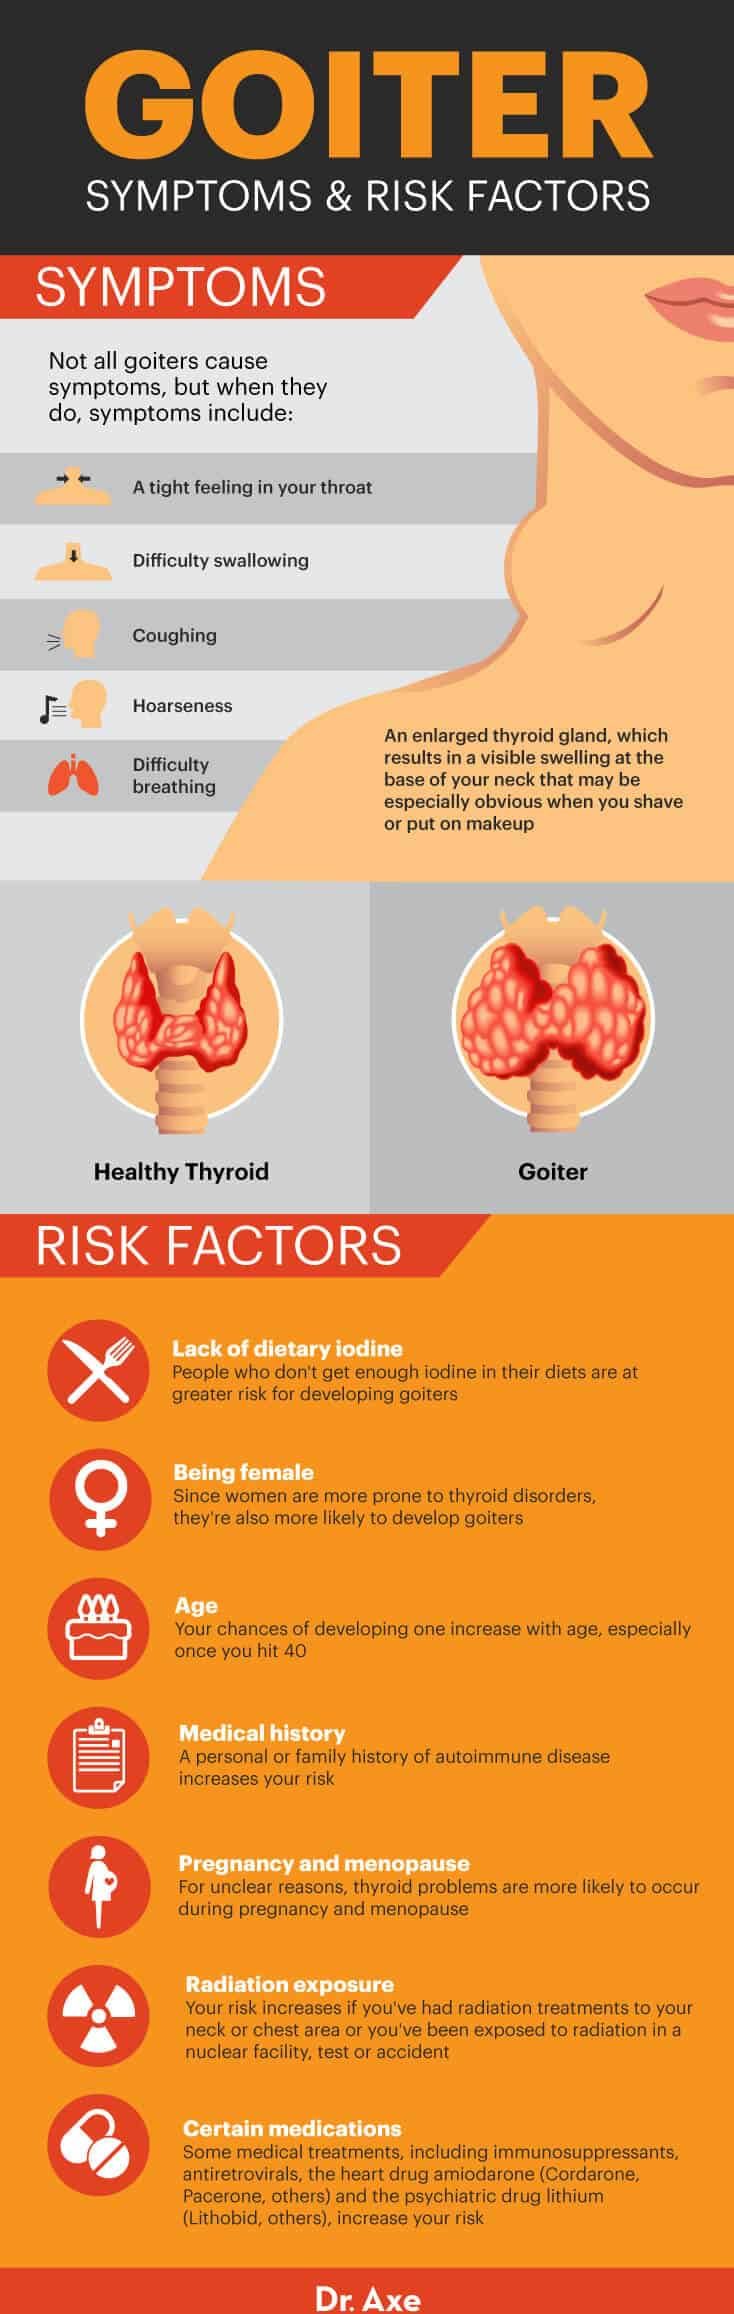 Goiter symptoms and risk factors - Dr. Axe